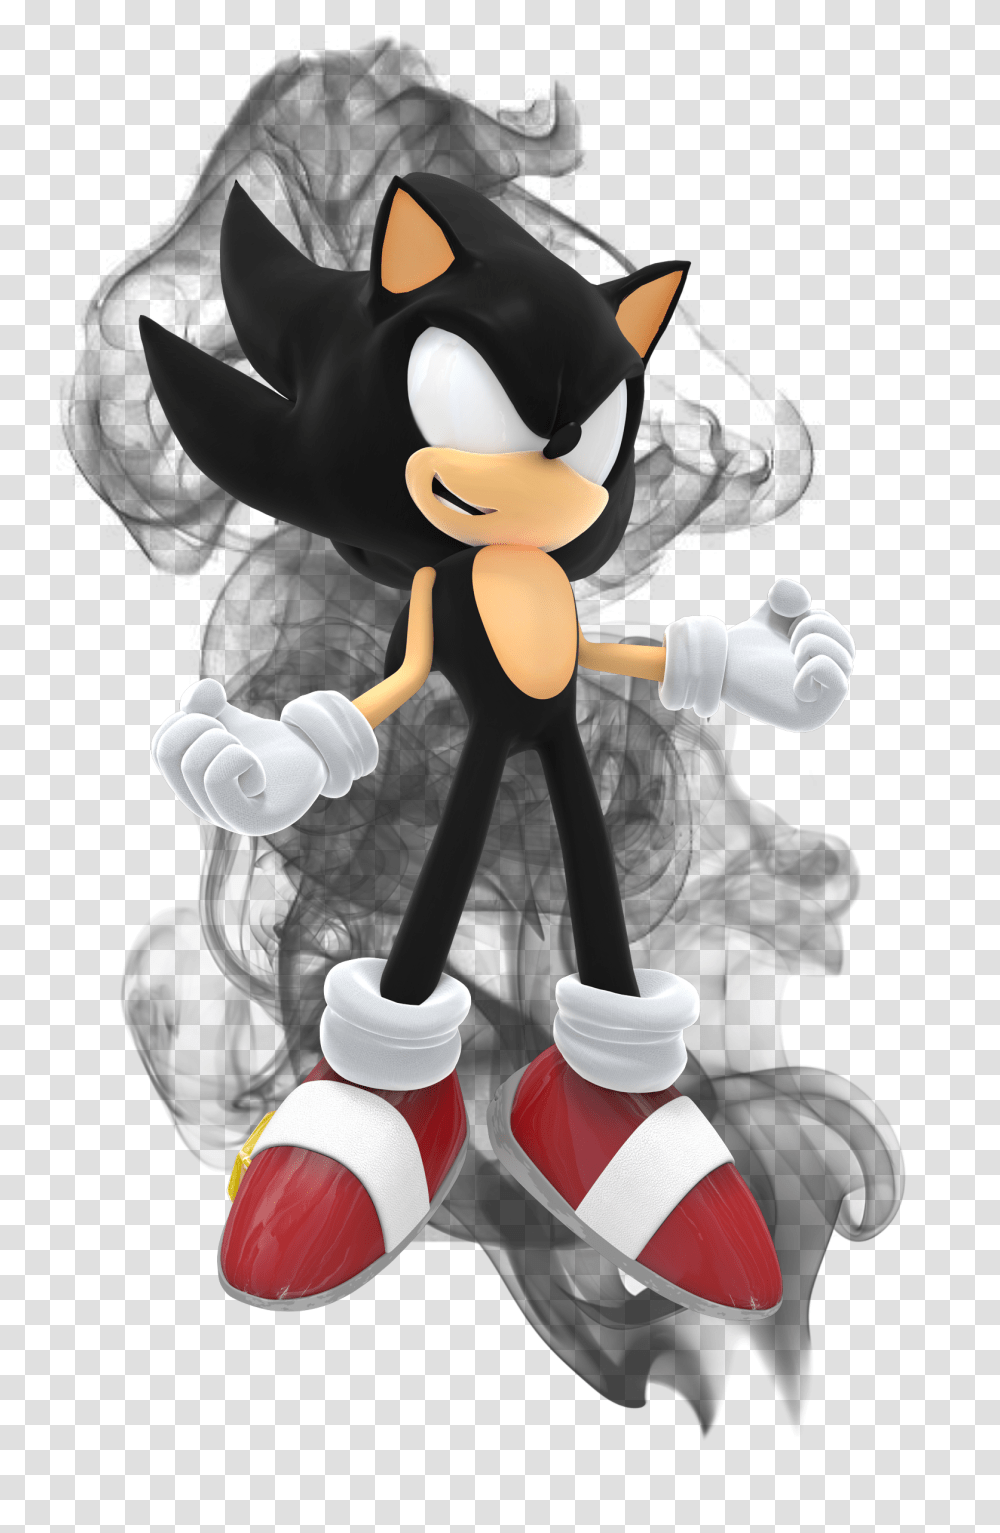 Sonic The Hedgehog Images Dark Super Sonic Hd Wallpaper Picsart Black Smoke, Toy, Figurine, Plush, Doll Transparent Png